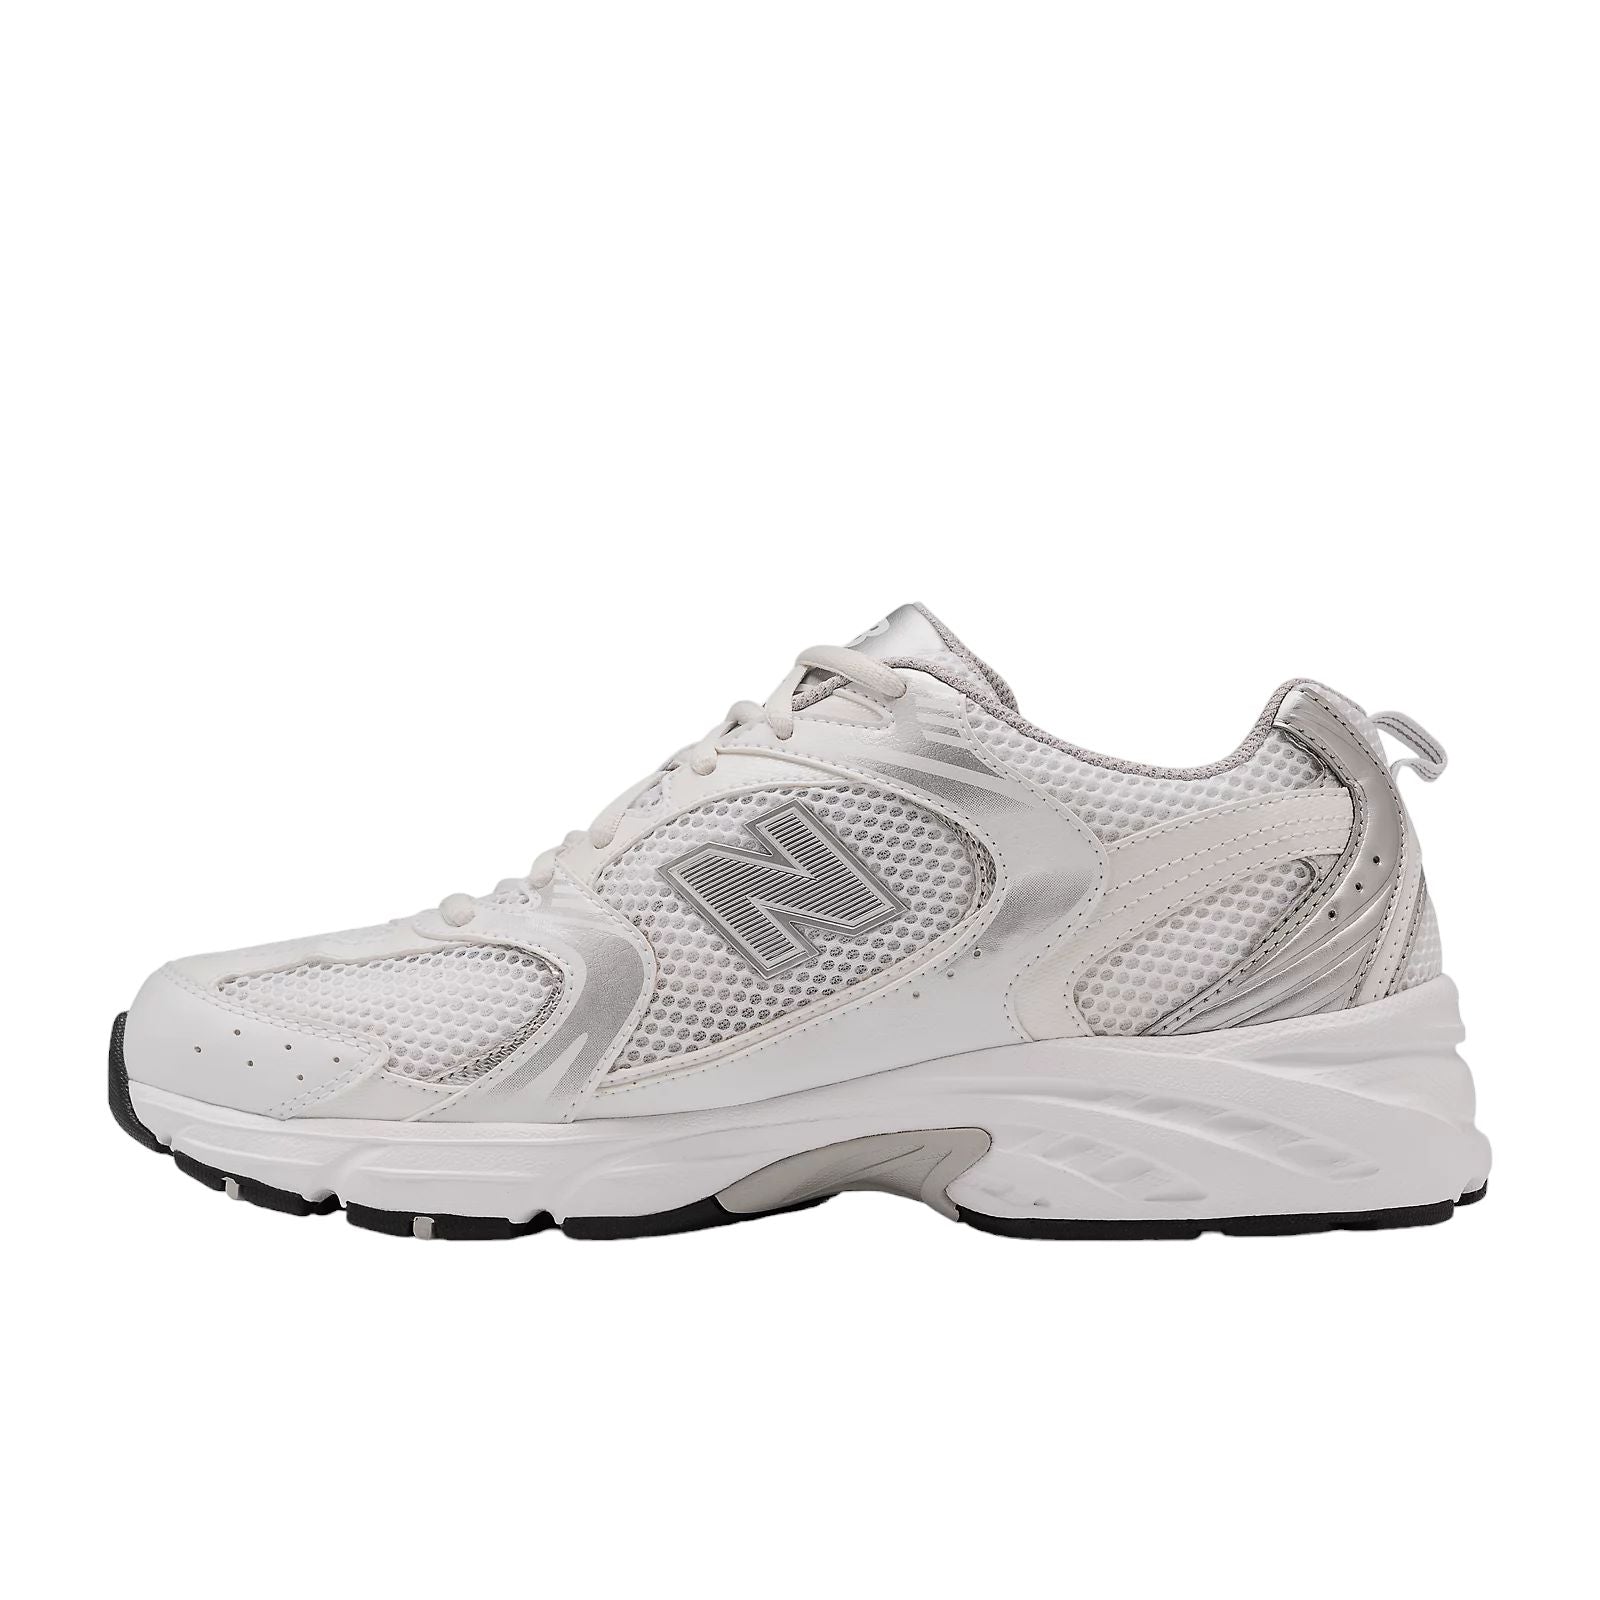 530 Shoes White/Silver Metallic 